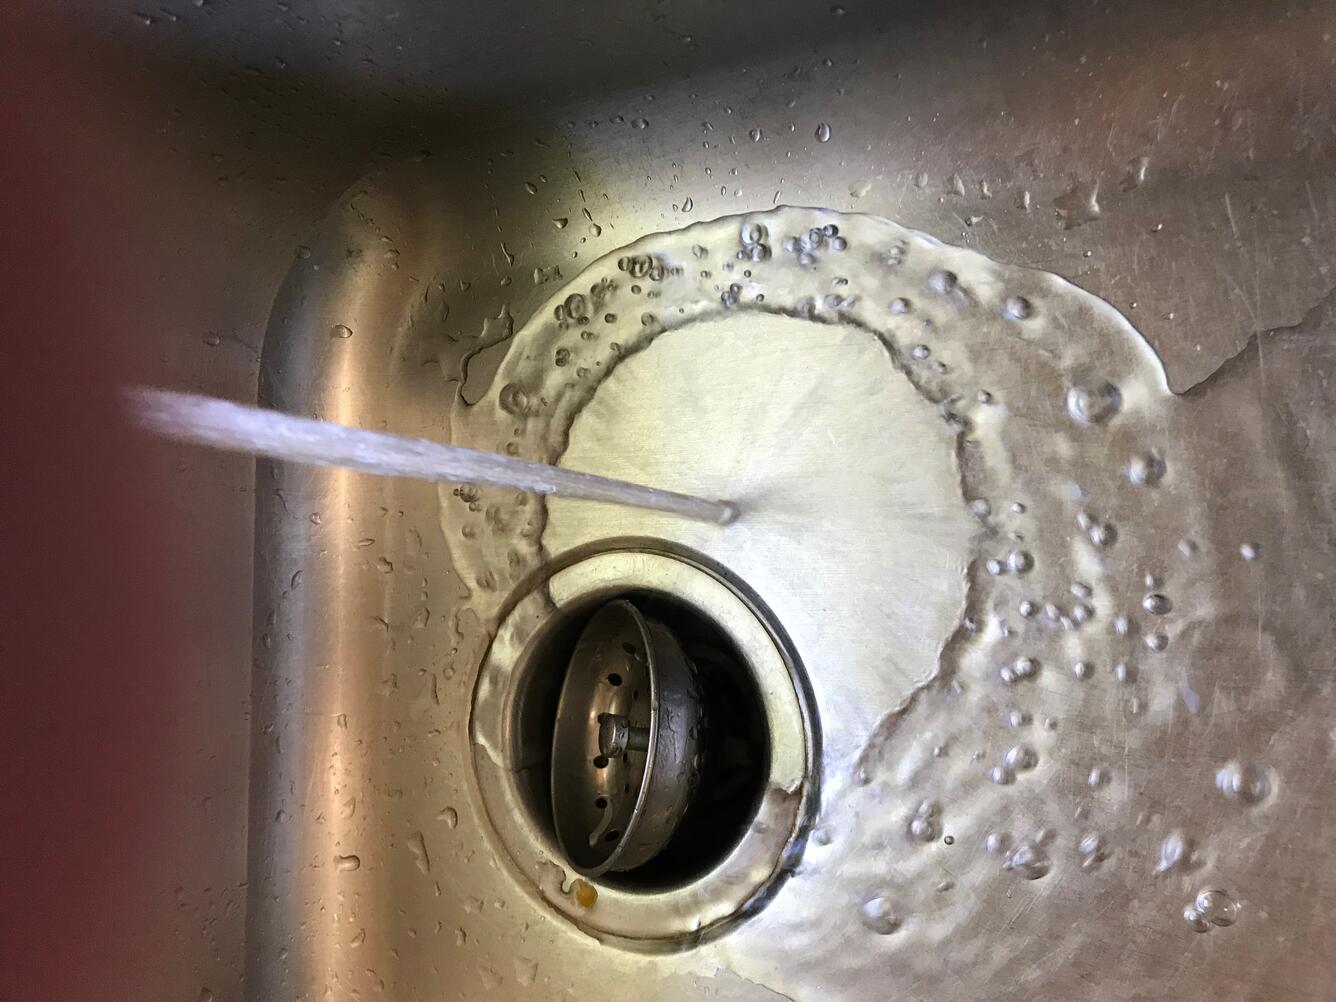 water flowing into kitchen sink